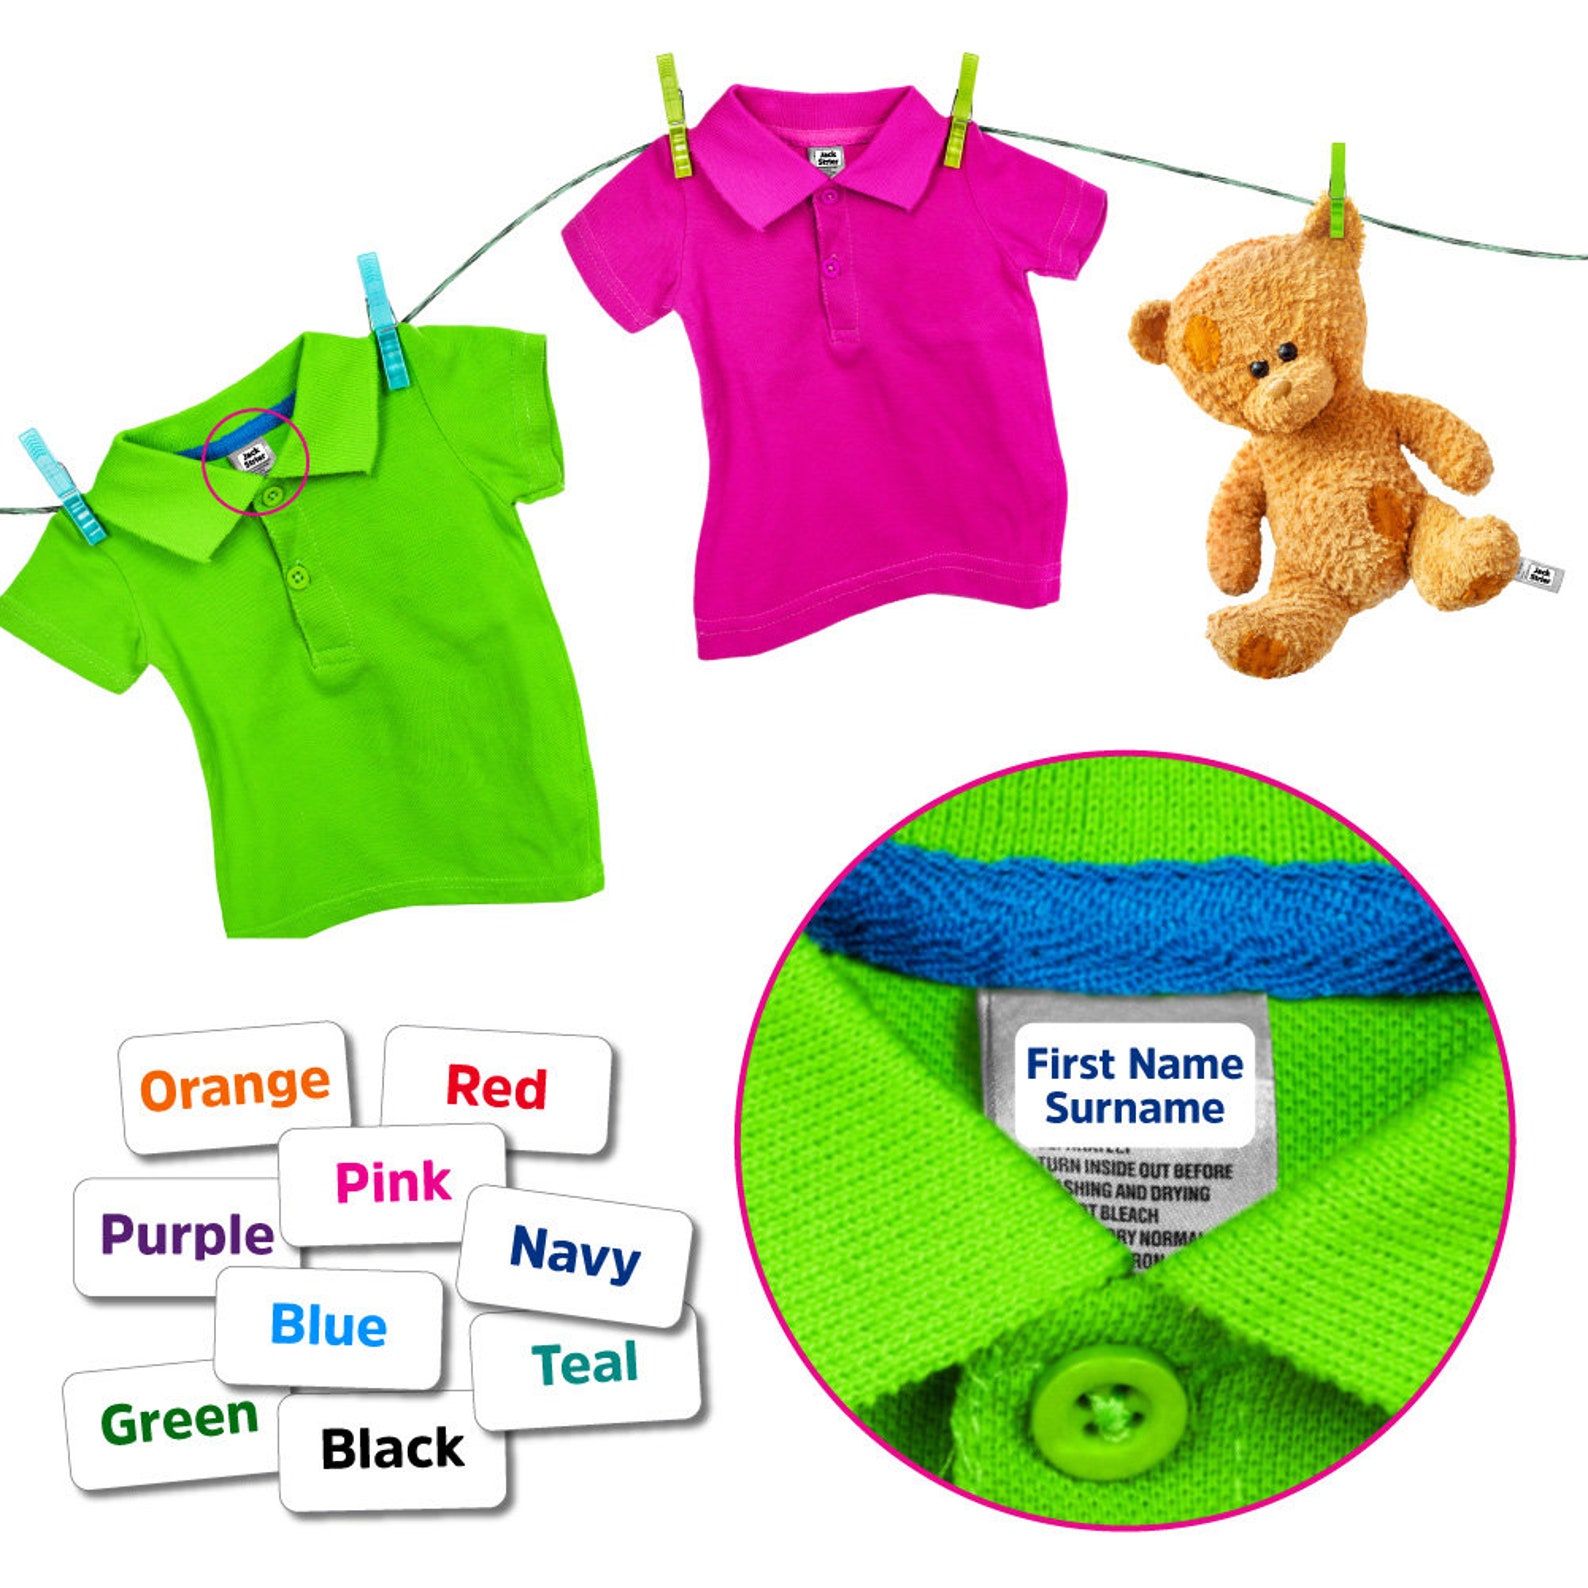 Теги одежда. Label clothes. Kids clothes Label. Red tag одежда детская. Inscription on clothes for children.